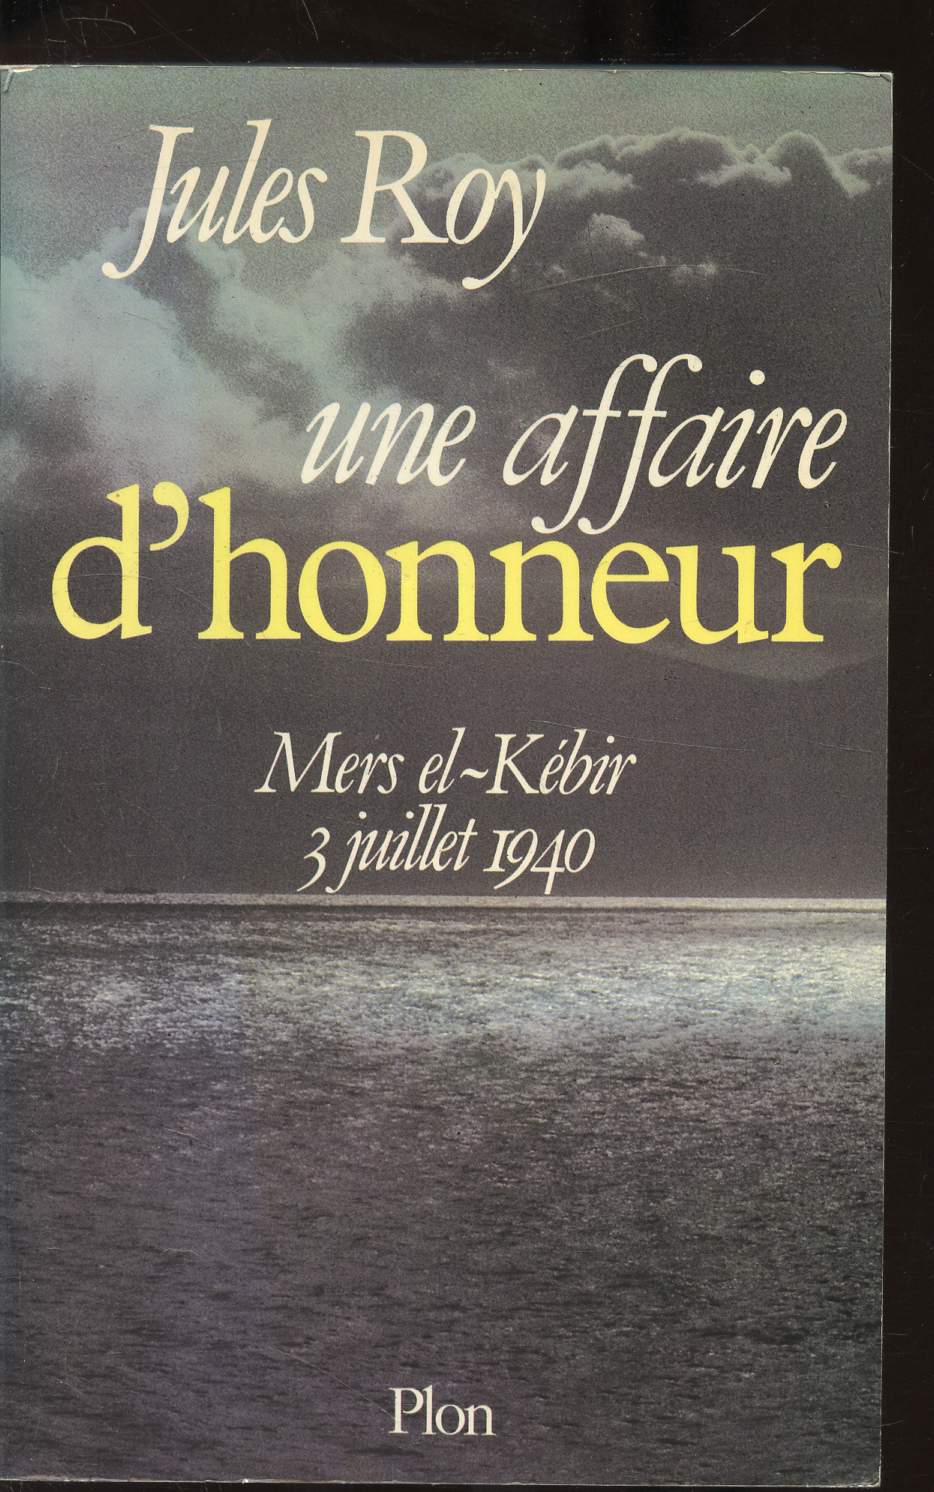 UNE AFFAIRE D'HONNEUR MERS EL KEBIR 3 JUILLET 1940